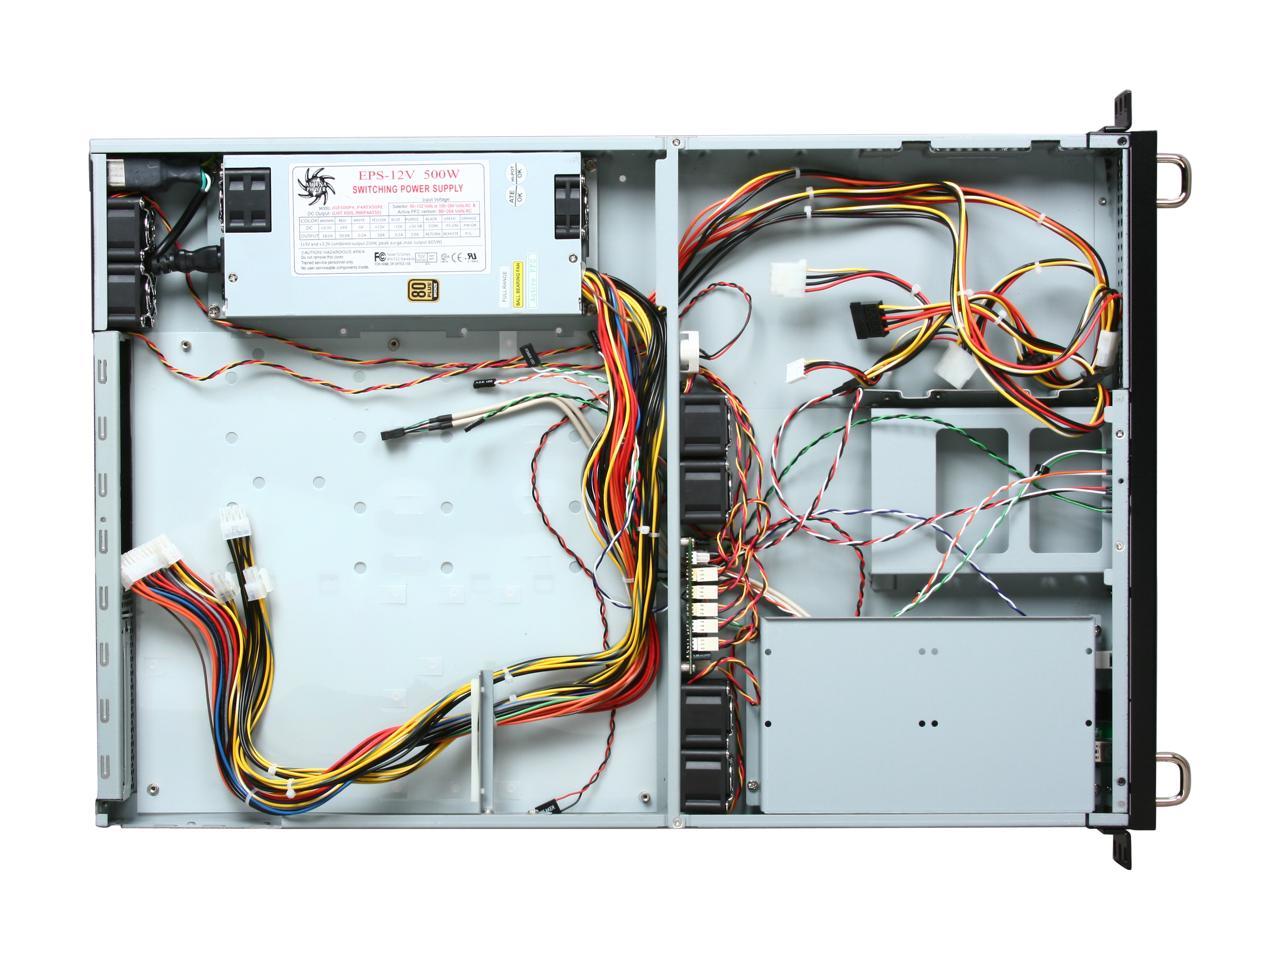 Athena Power Rm-1U164A5 Black 1.0 Mm Steel 1U Rackmount Server Case With Eps-12V 500W Power Supply Pfc 1 External 5.25" Drive Bays